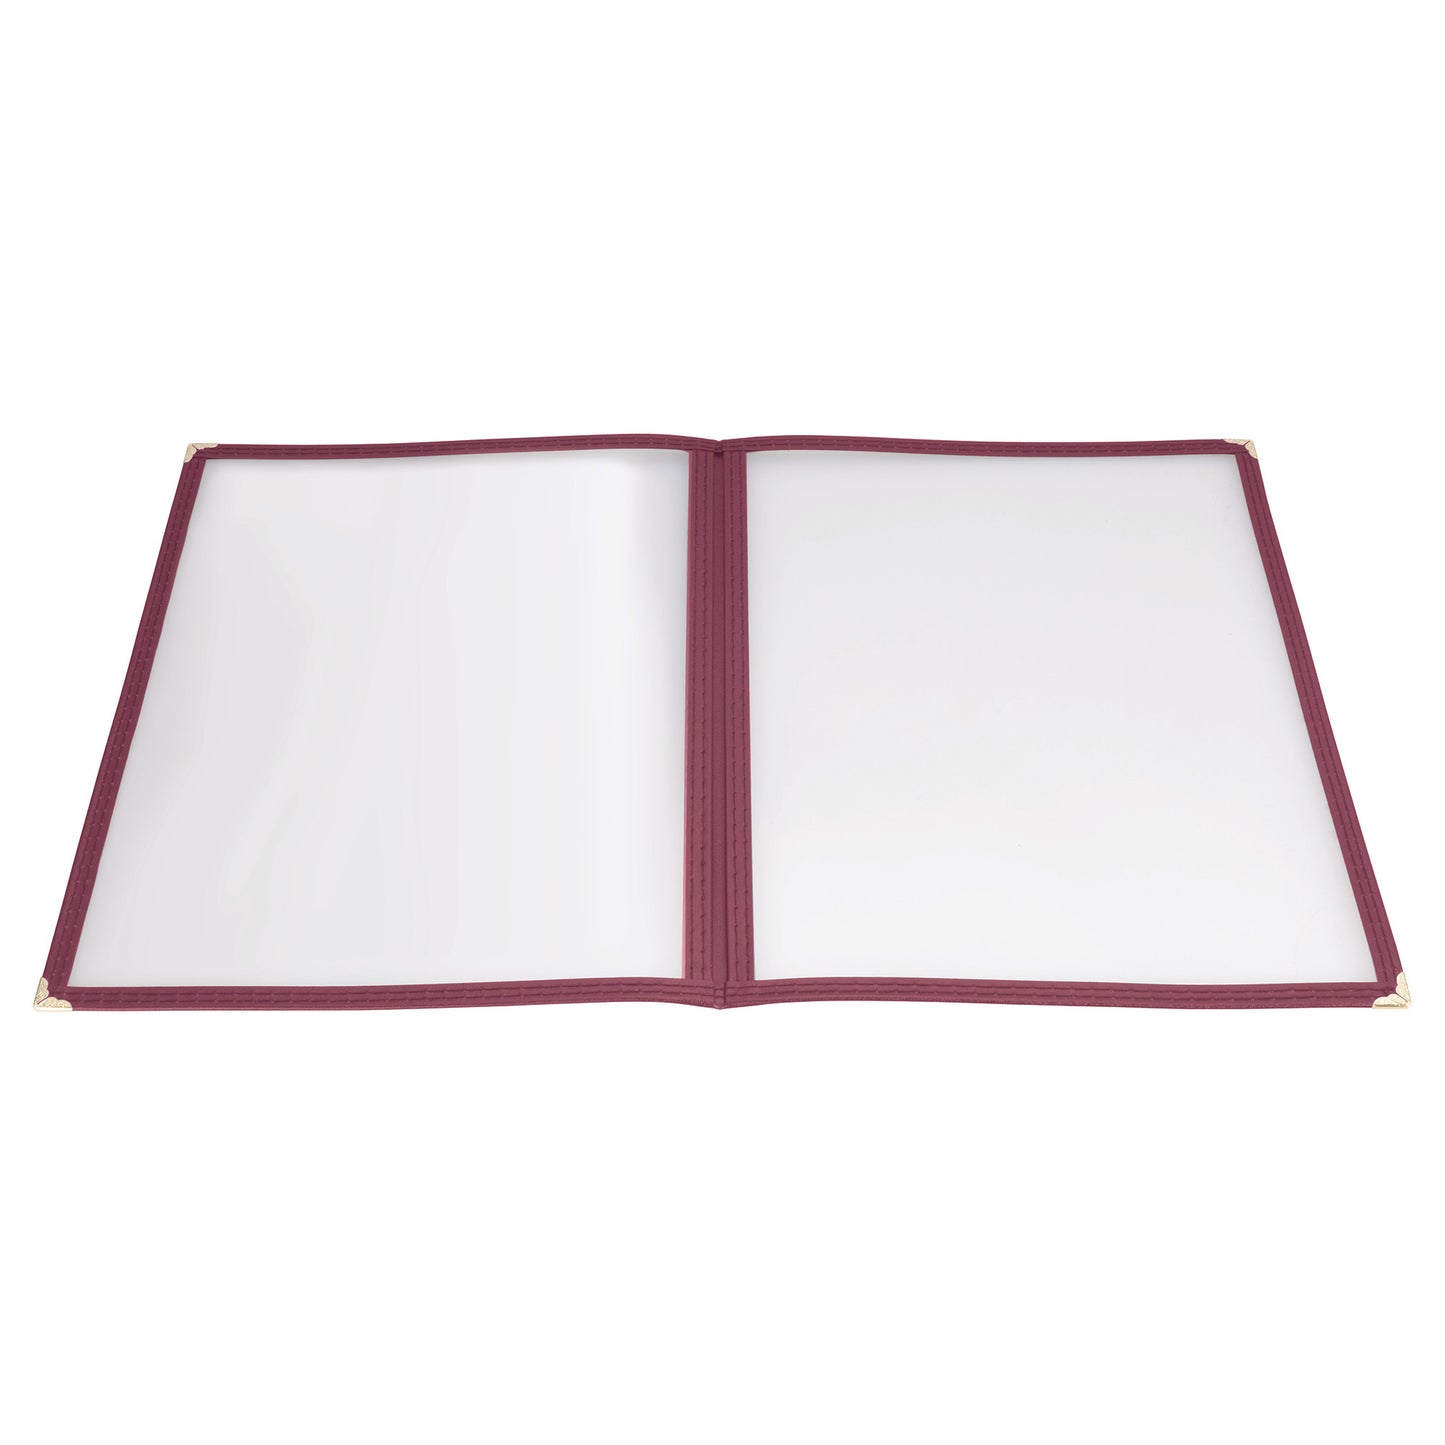 PMCD-9U - Book-Fold Double Panel Menu Cover - Burgundy, 9-3/8 x 12-1/8